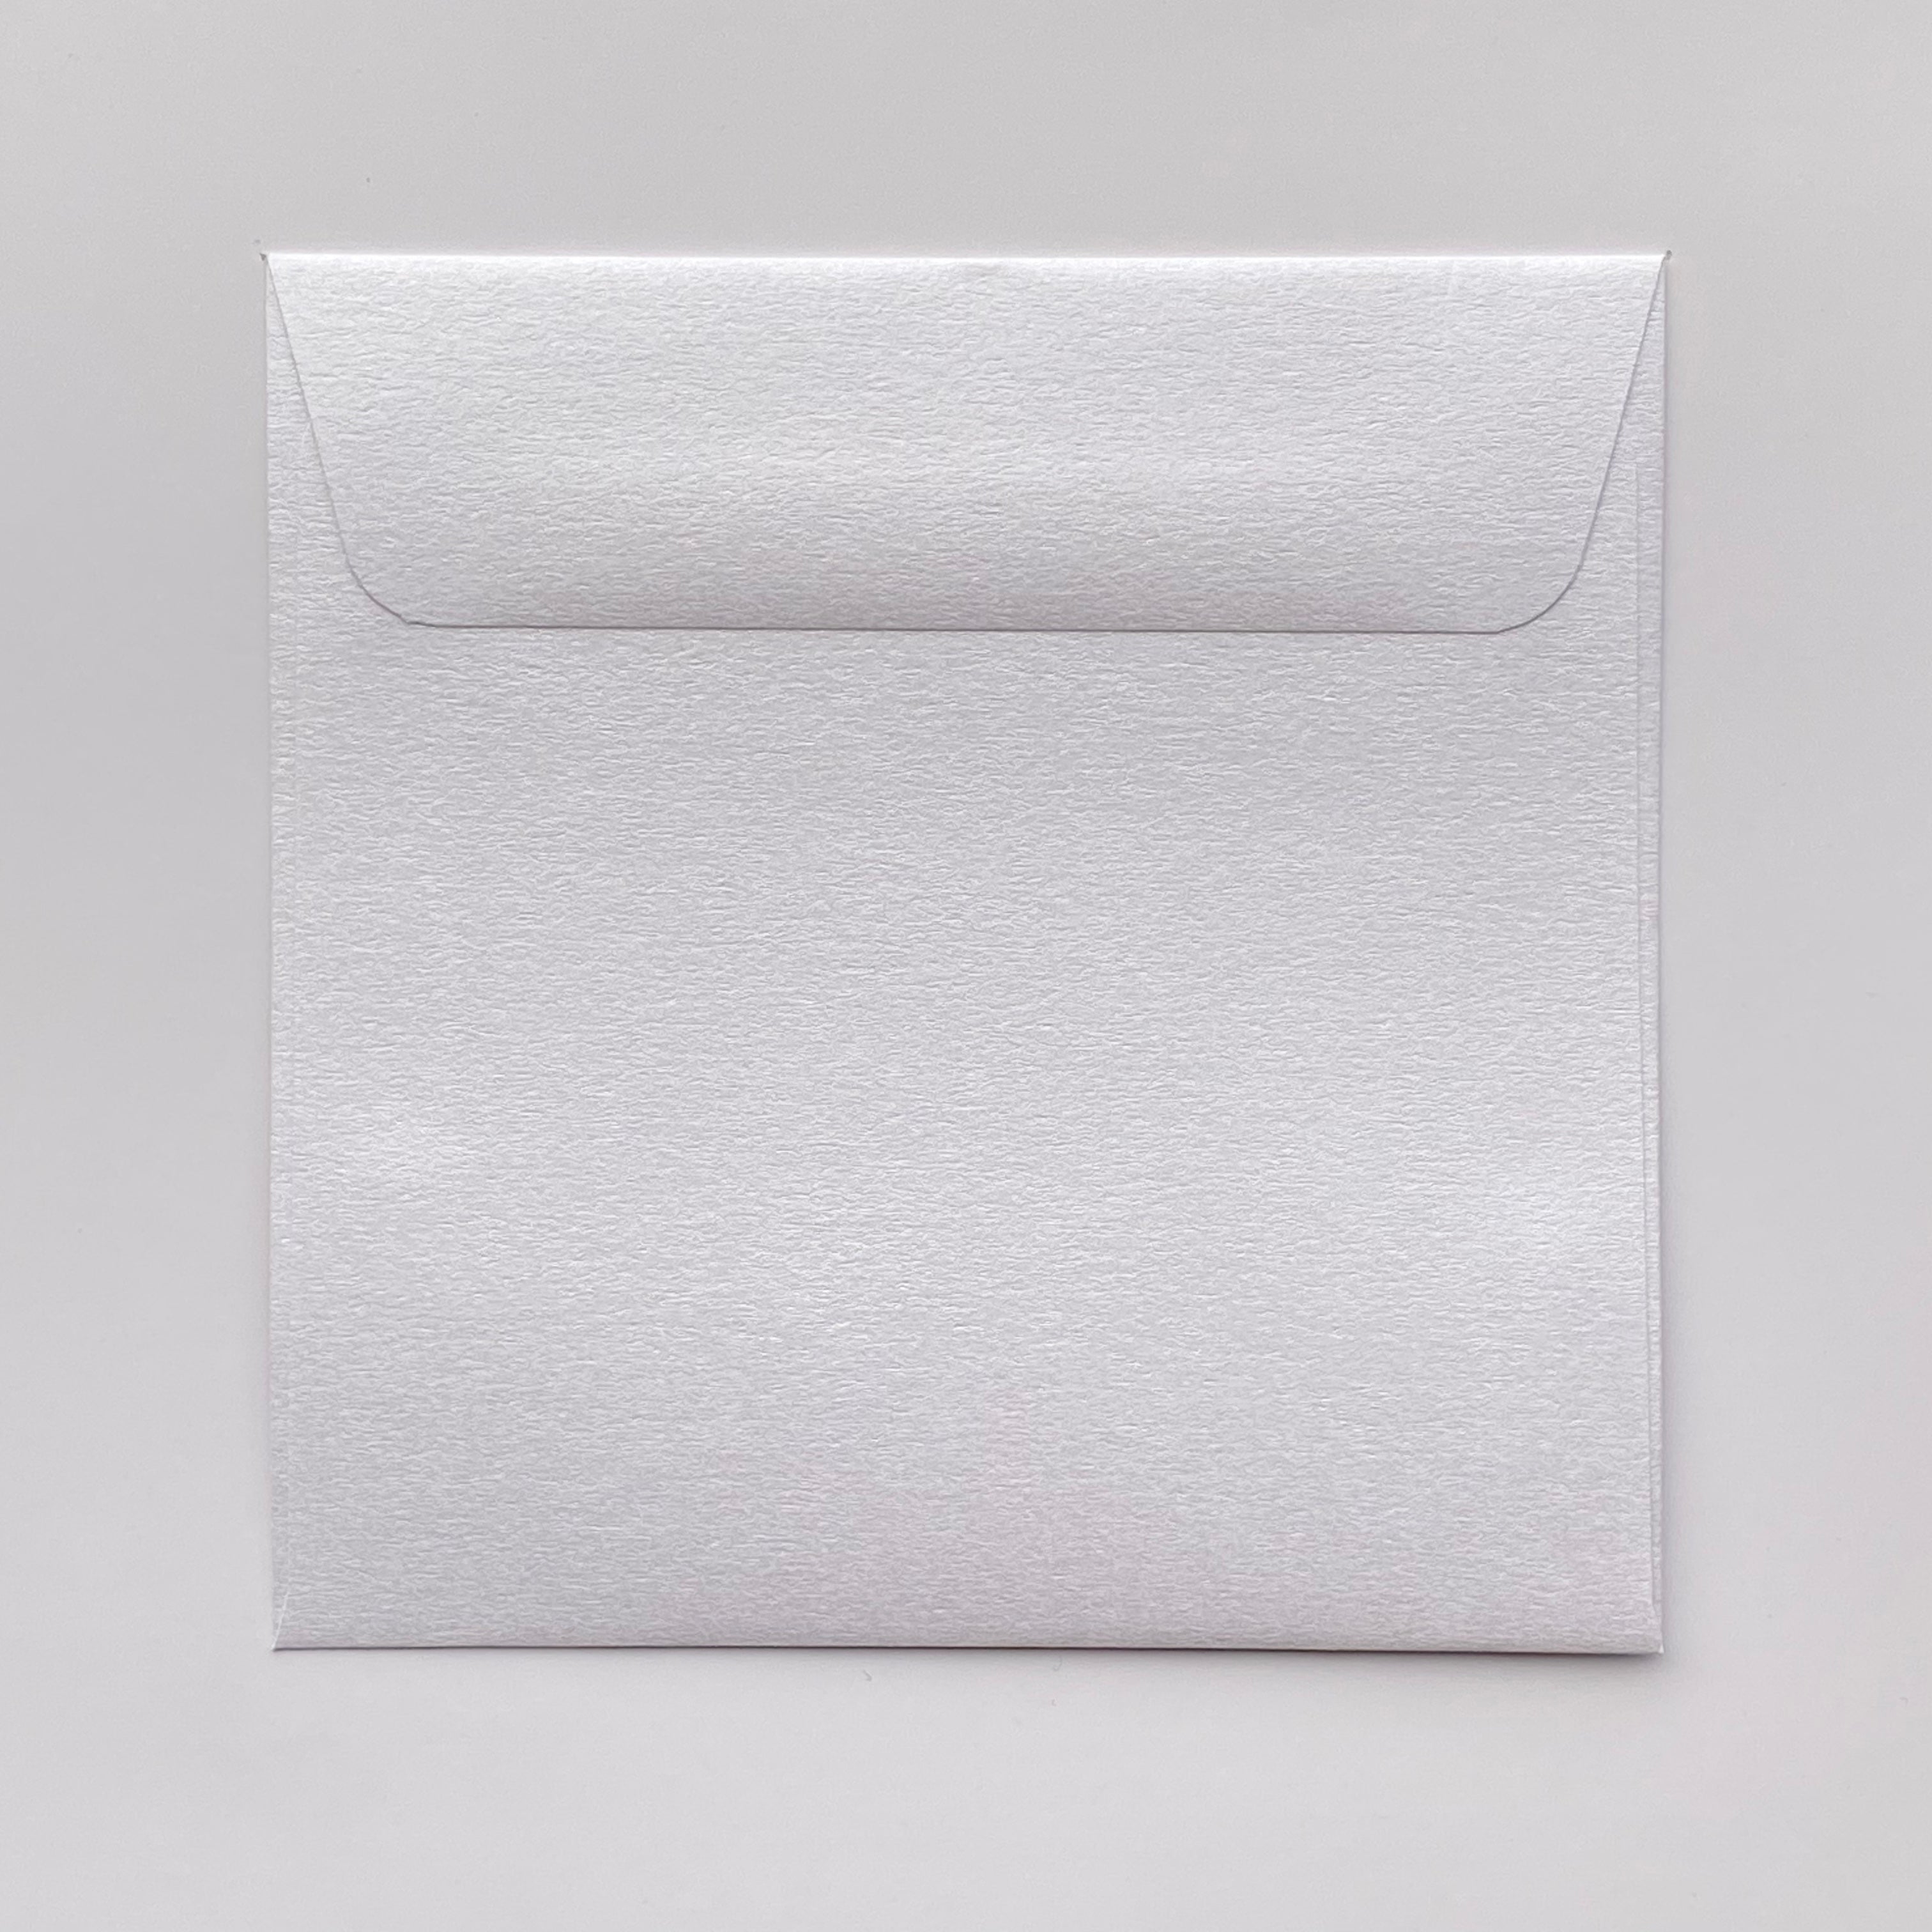 155mm square metallic envelopes